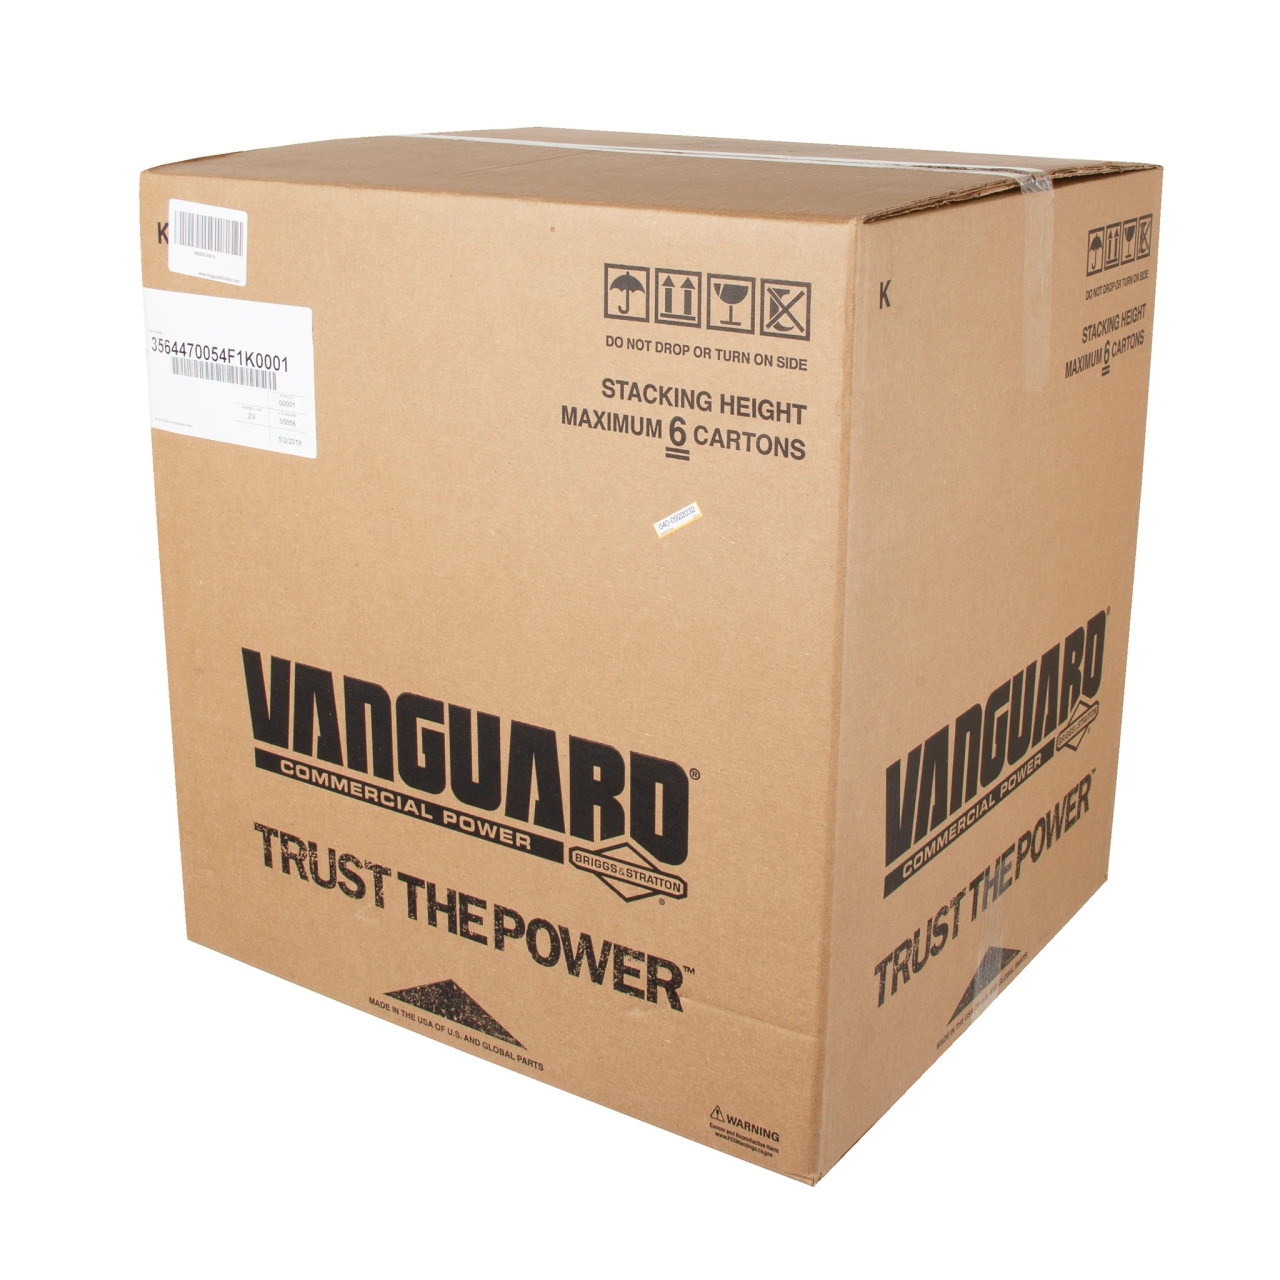 Vanguard® 18.0 HP 570cc Horizontal Shaft Engine 356447-0054-F1